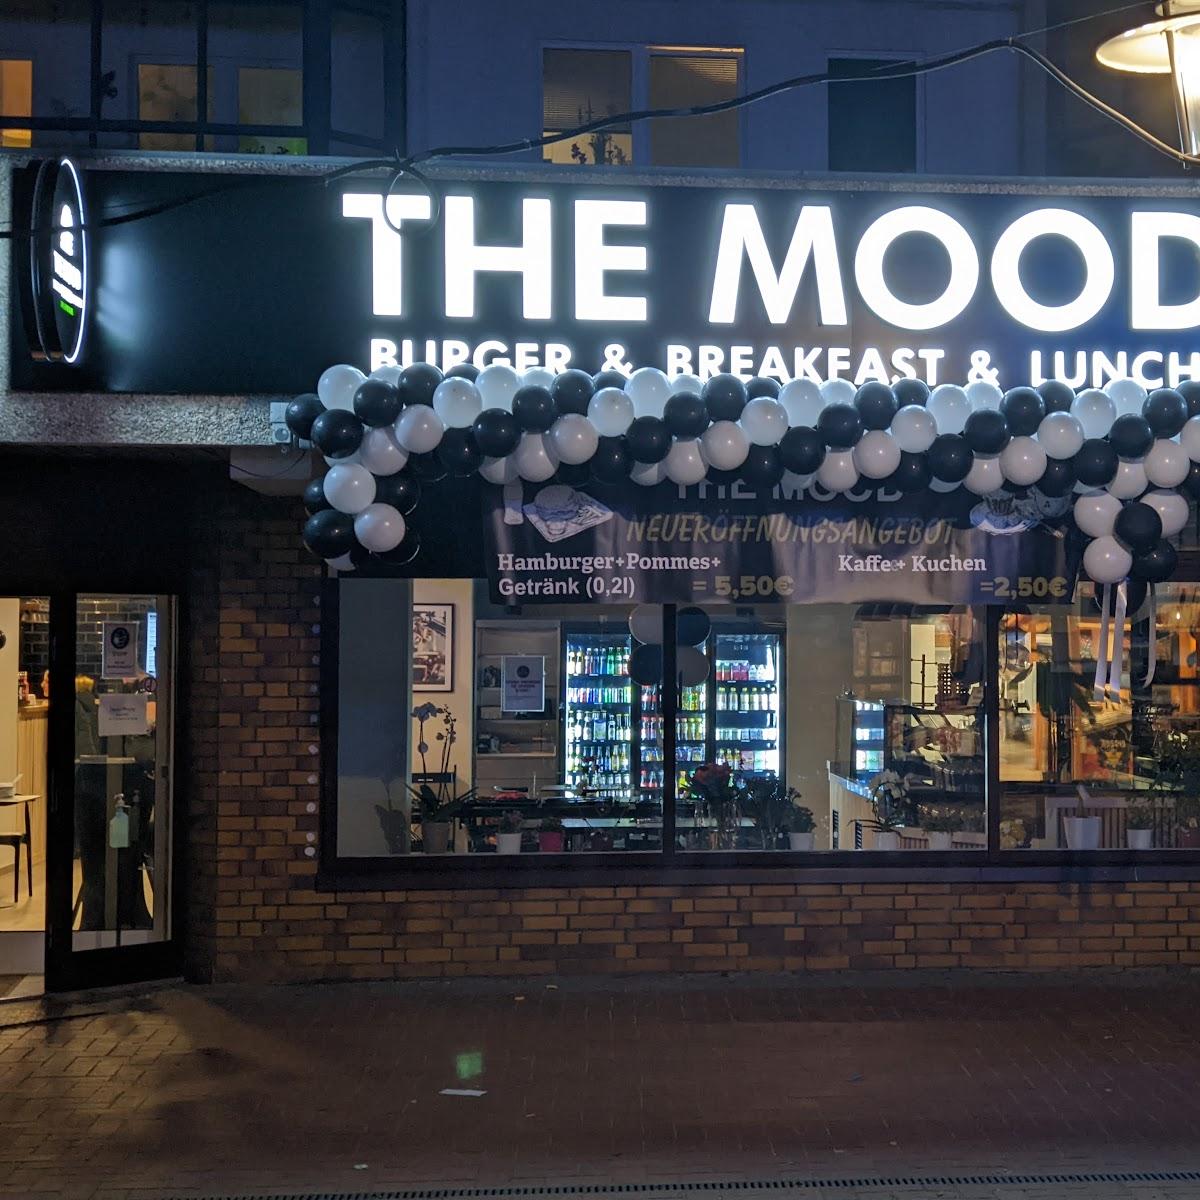 Restaurant "The Mood" in Berlin